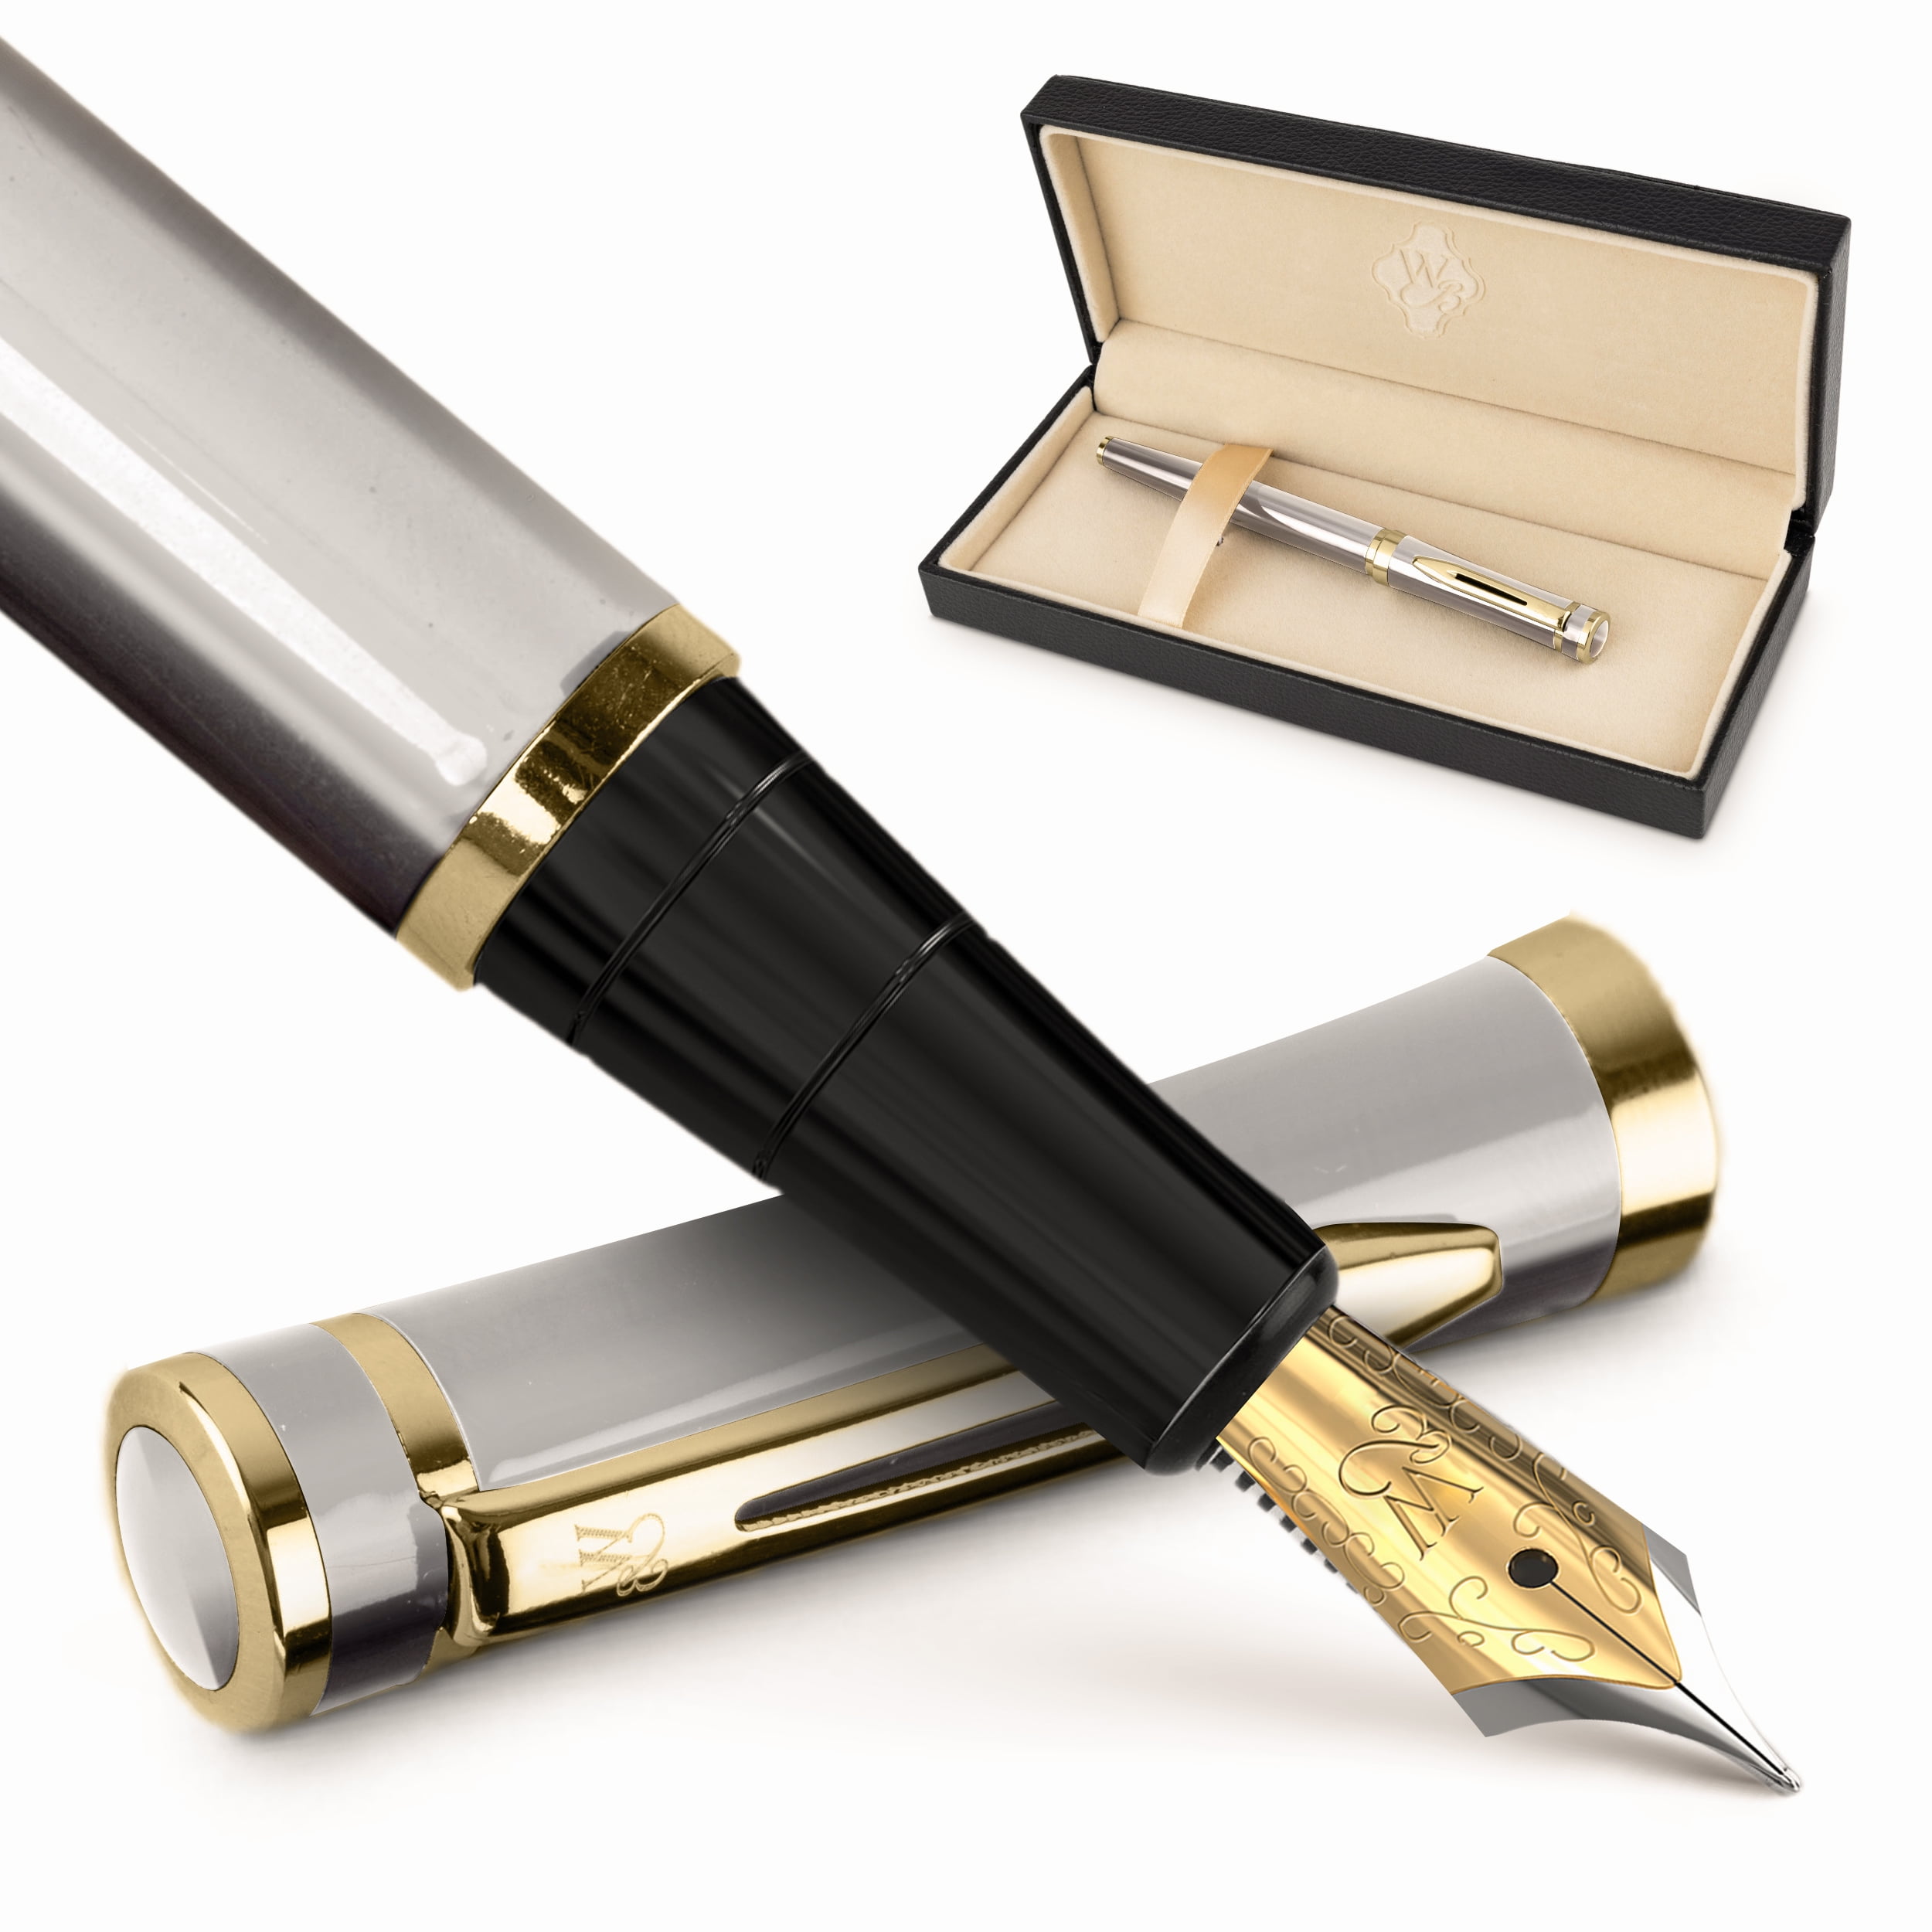 Wordsworth & Black Fountain Pen, Medium Nib Ink Pen, White Gold - Refillable, Calligraphy, Silver